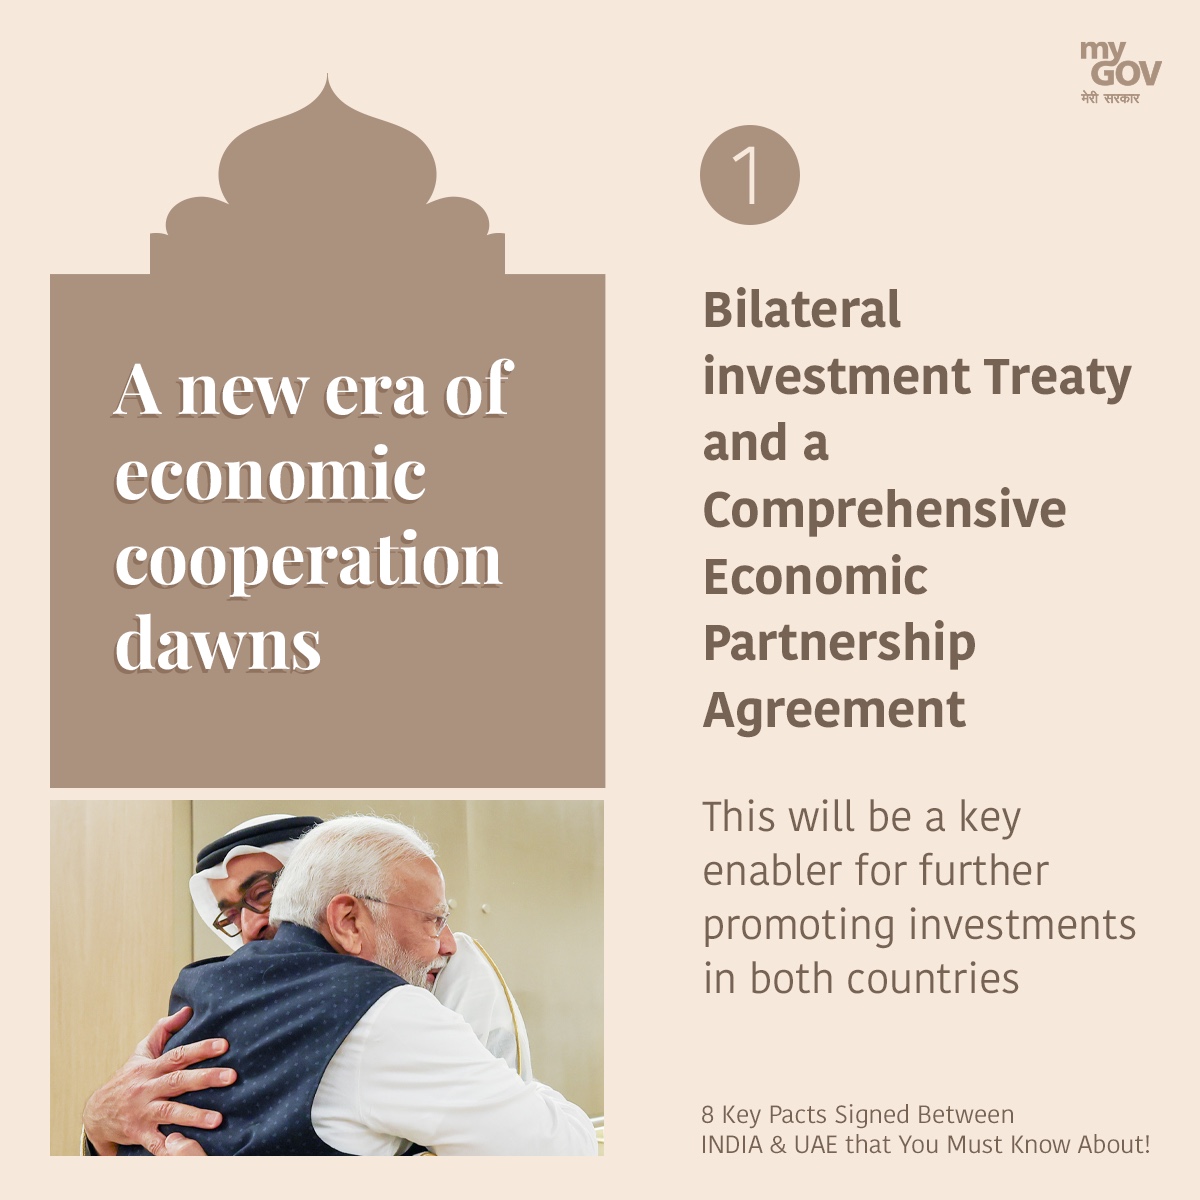 Bilateral investment Treaty and a Comprehensive Economic Partnership Agreement

#PMModi #IndiaUAE